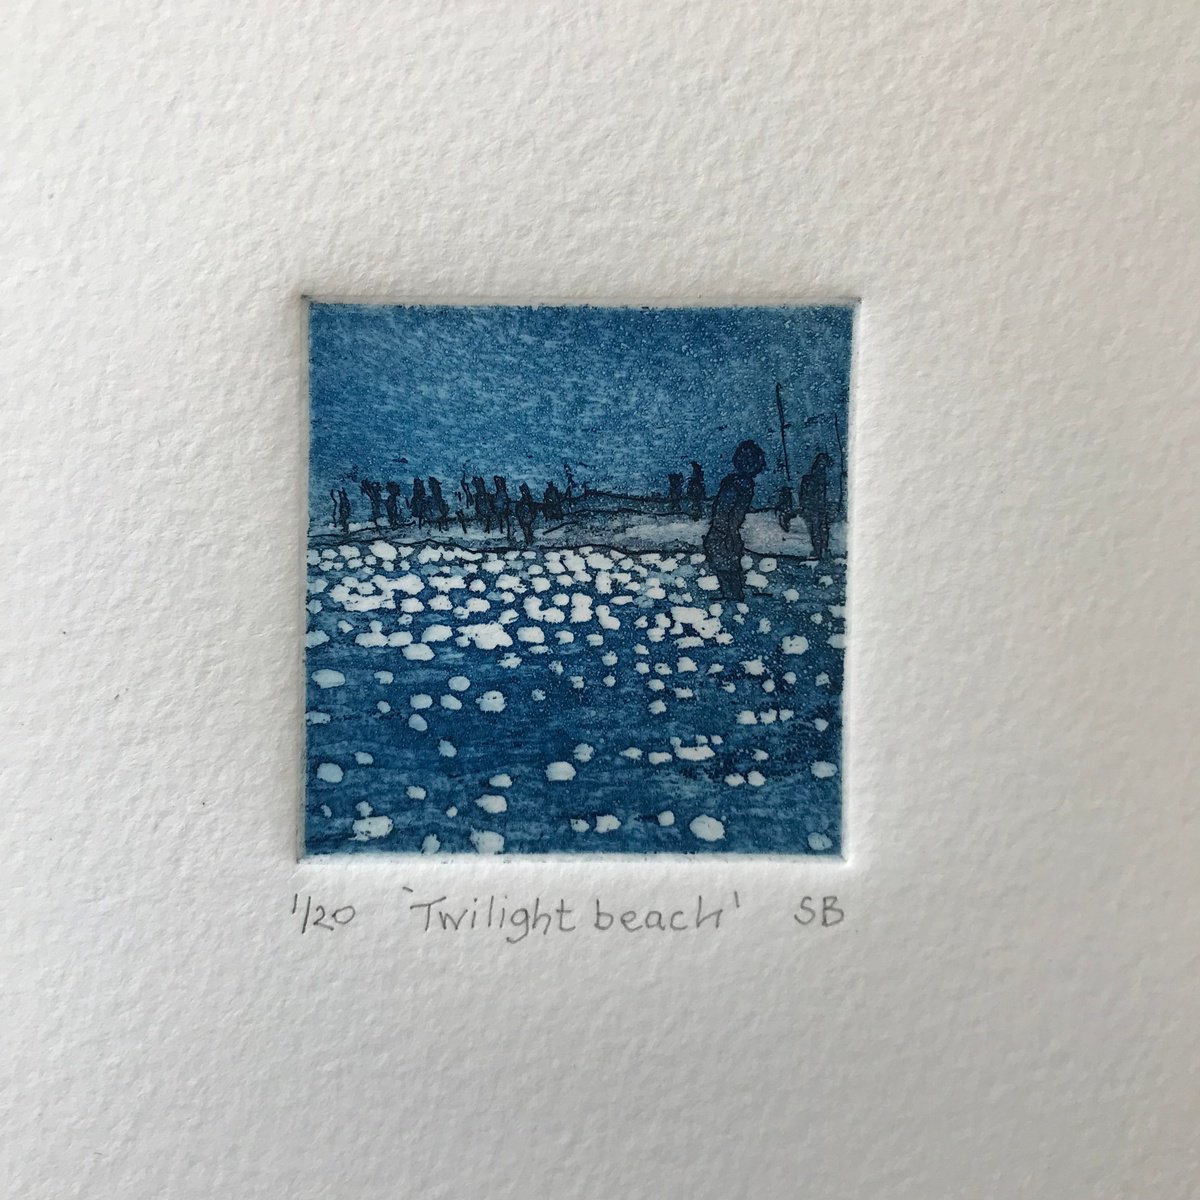 Twilight beach. by Stephen Brook